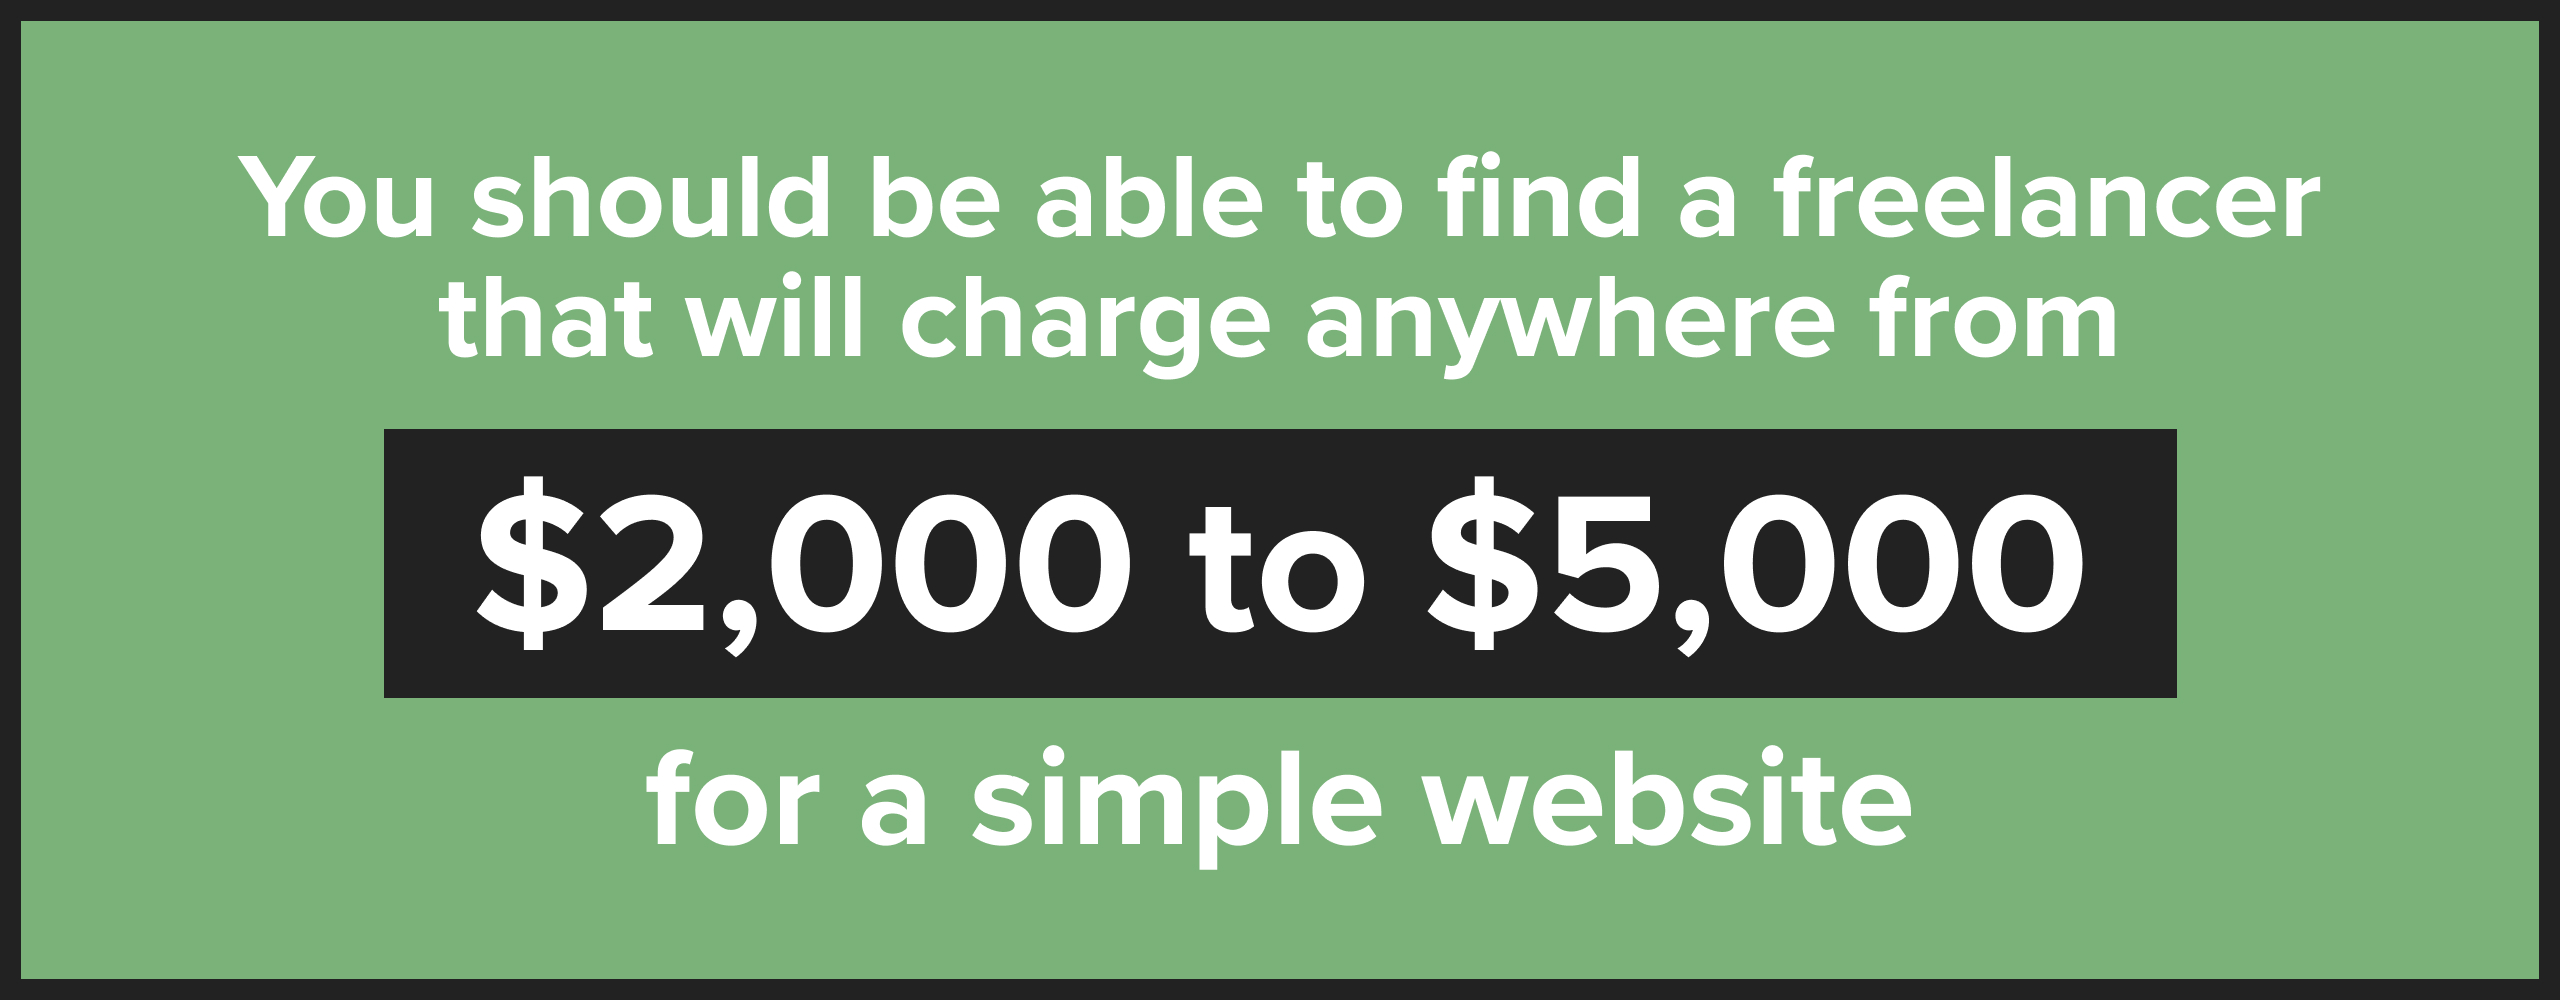 freelance-website-cost